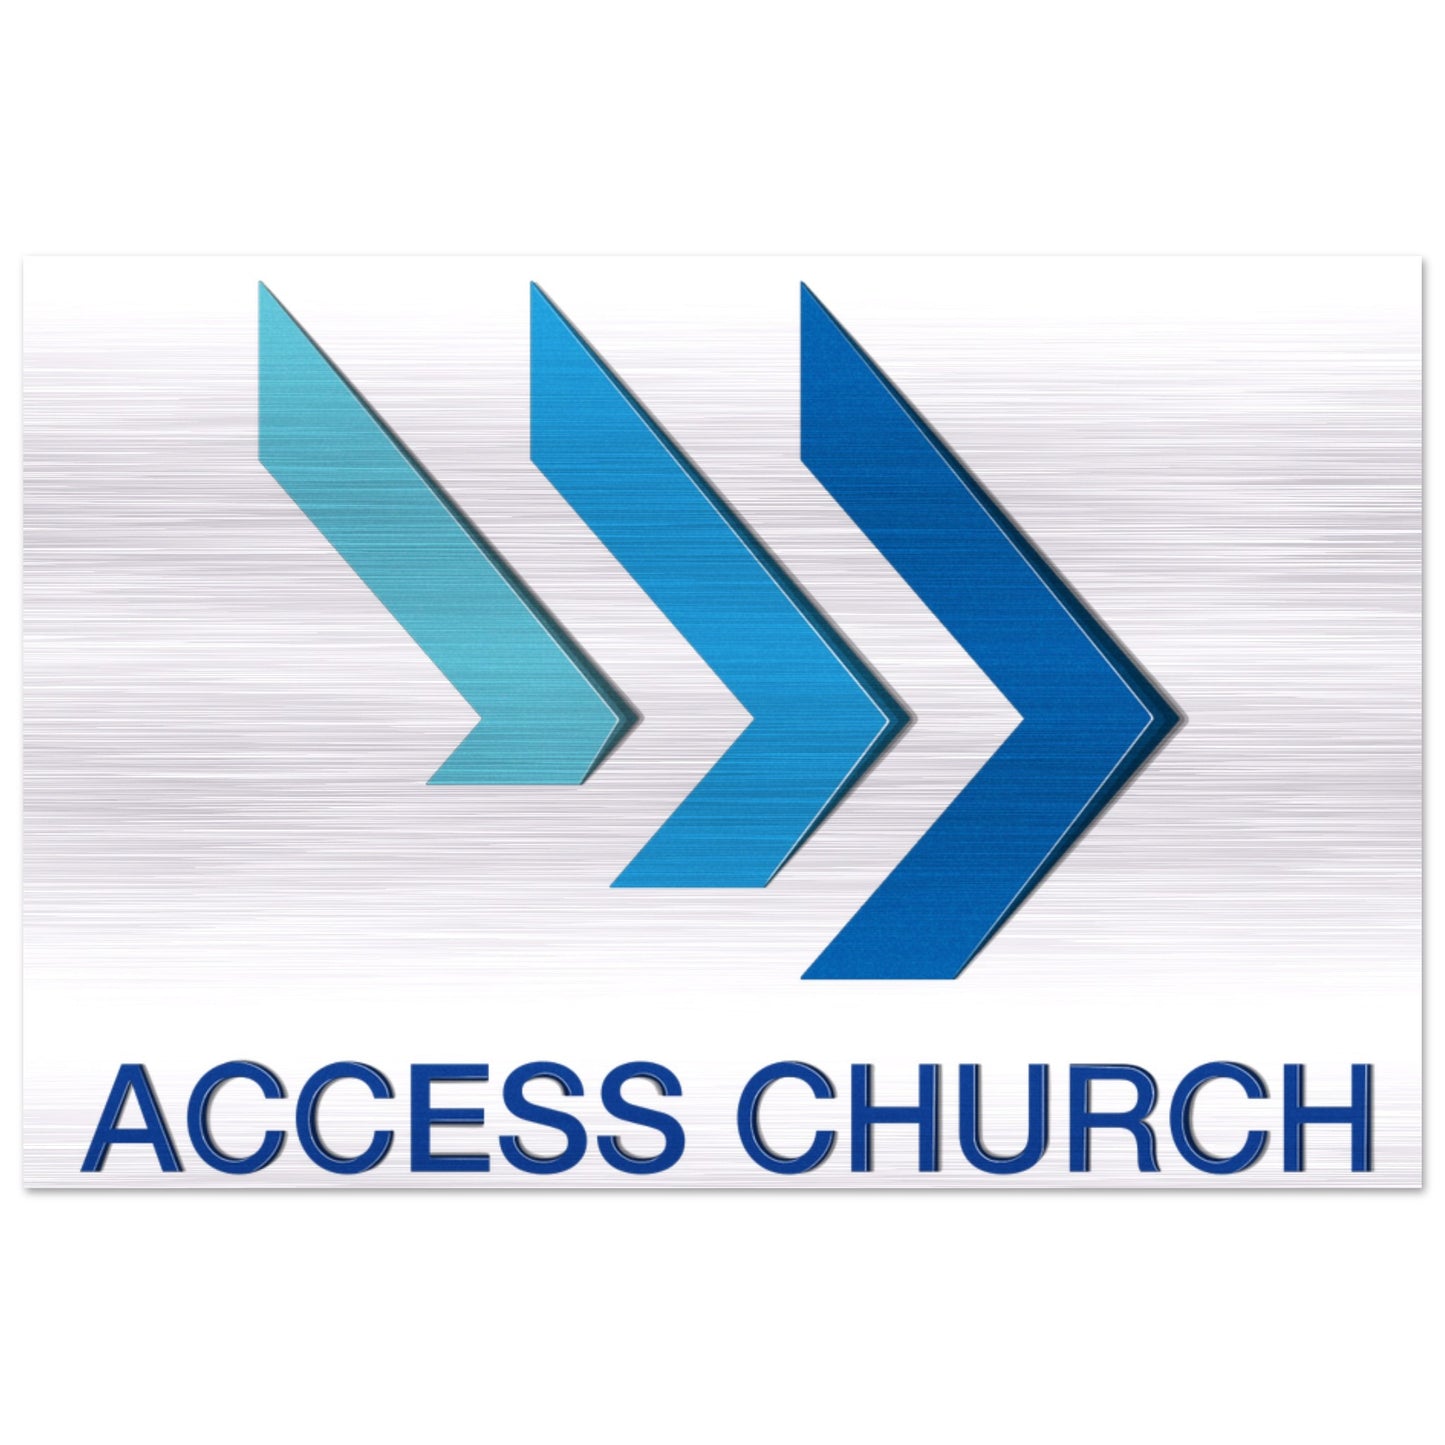 Access Church - Brushed Aluminum Print